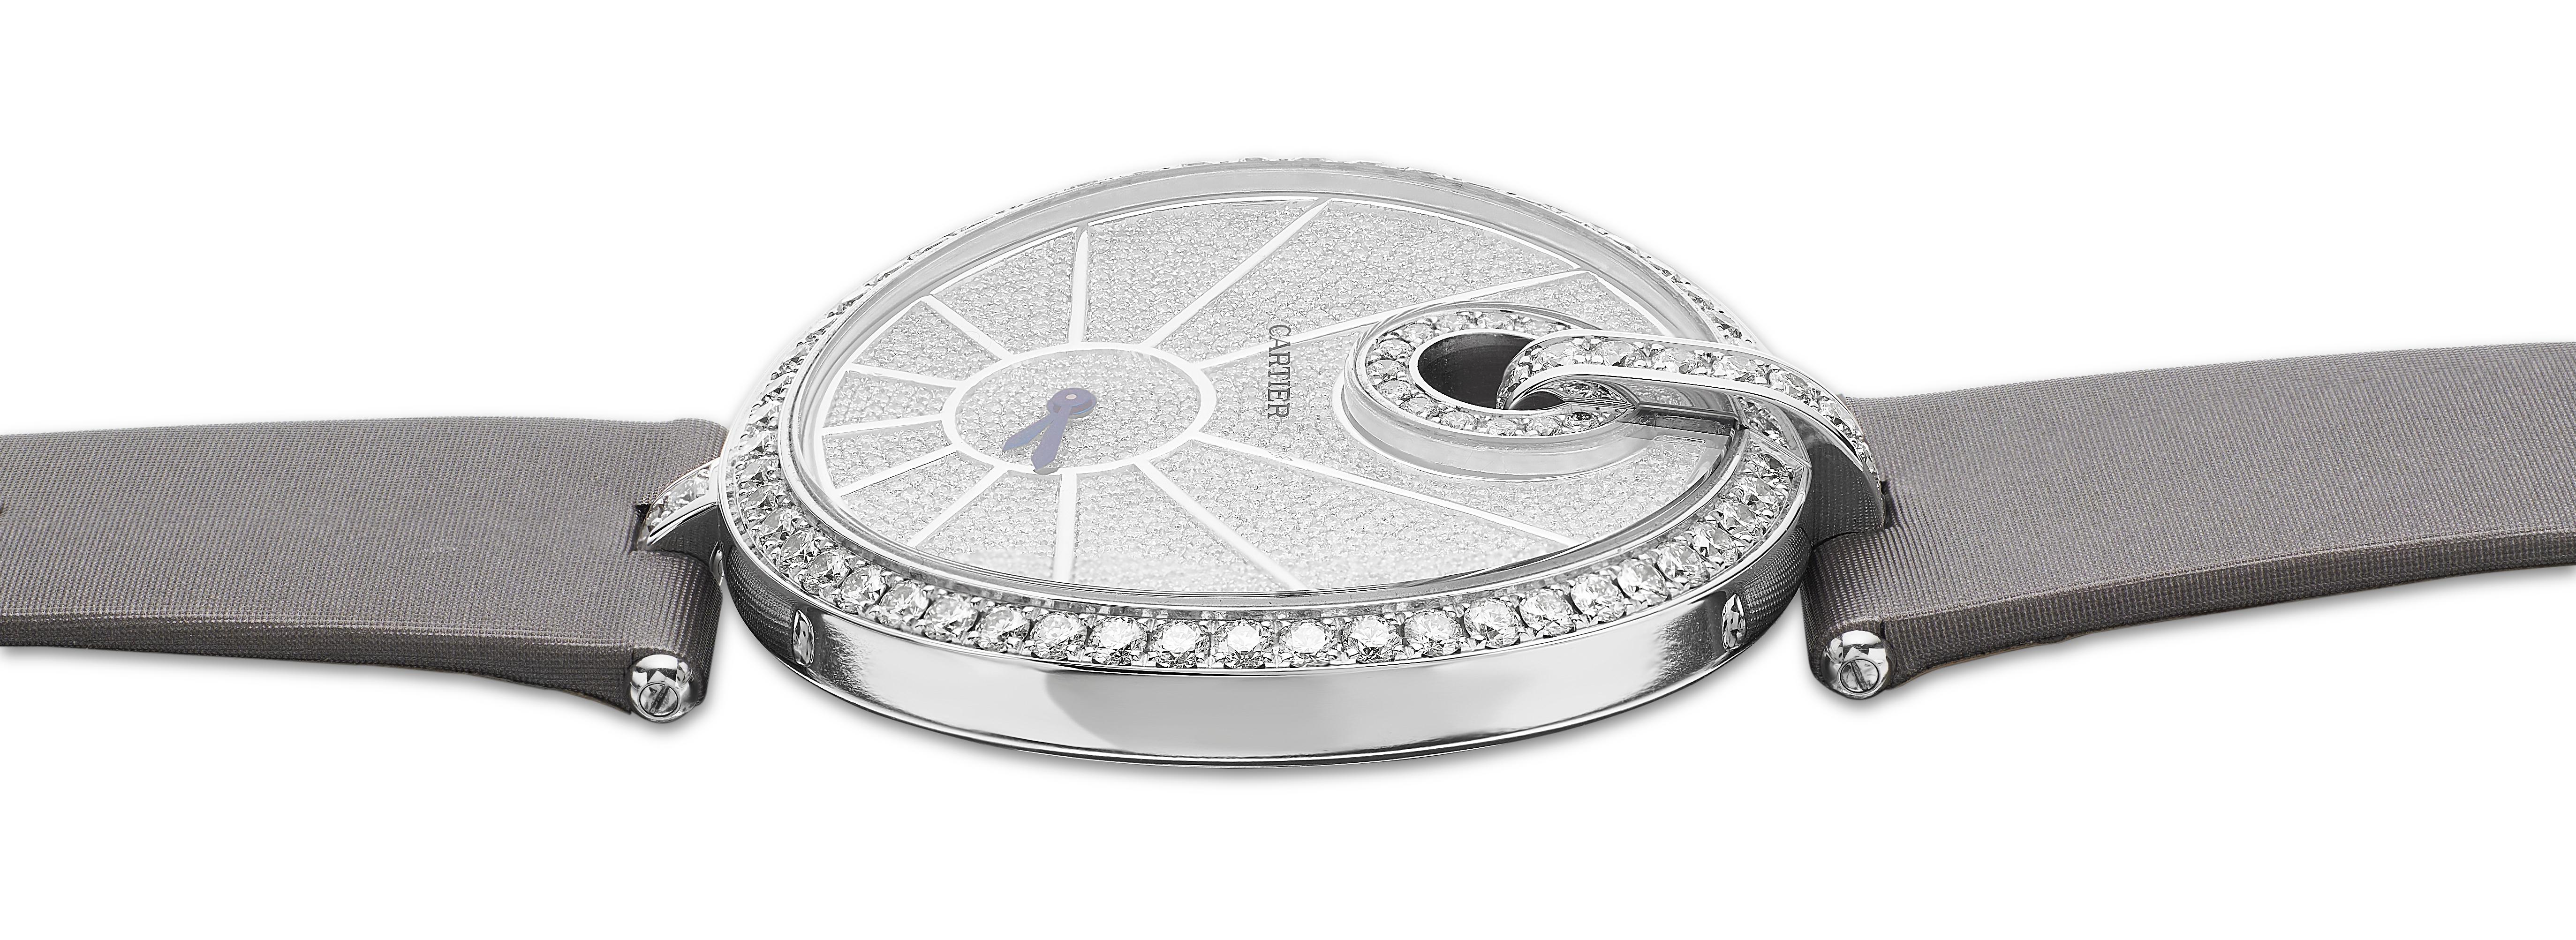 Round Cut Captive de Cartier Watch White Gold Diamond, High Jewelry Extra Large